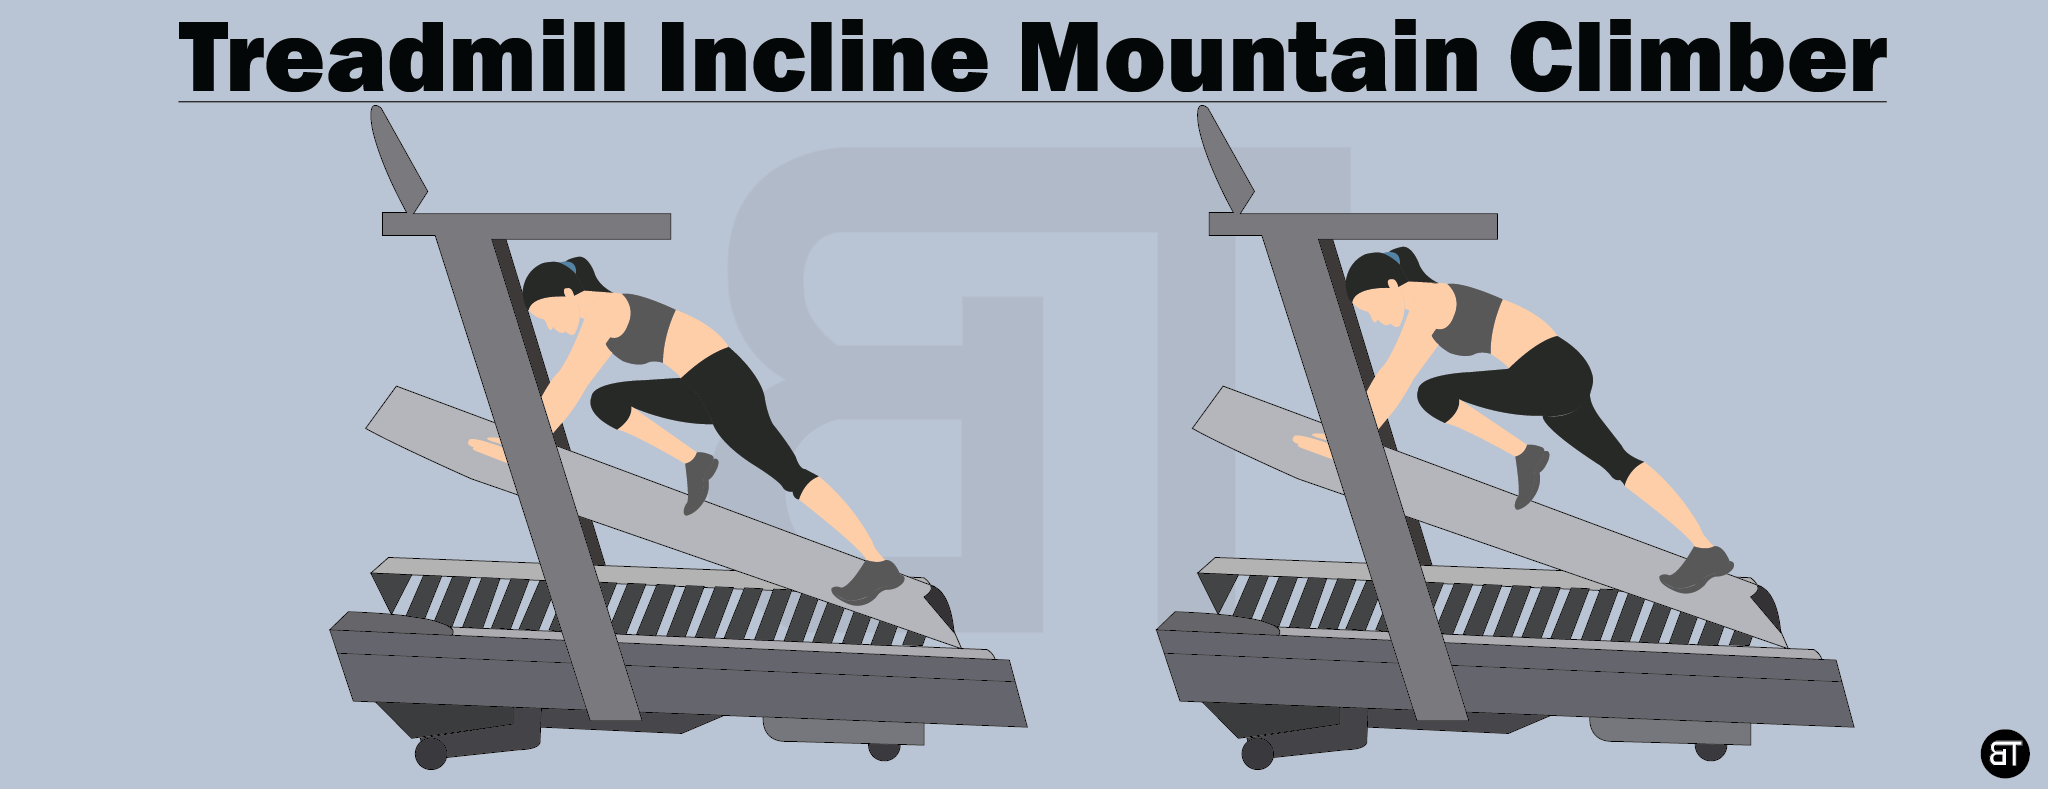 Treadmill Incline Mountain Climber